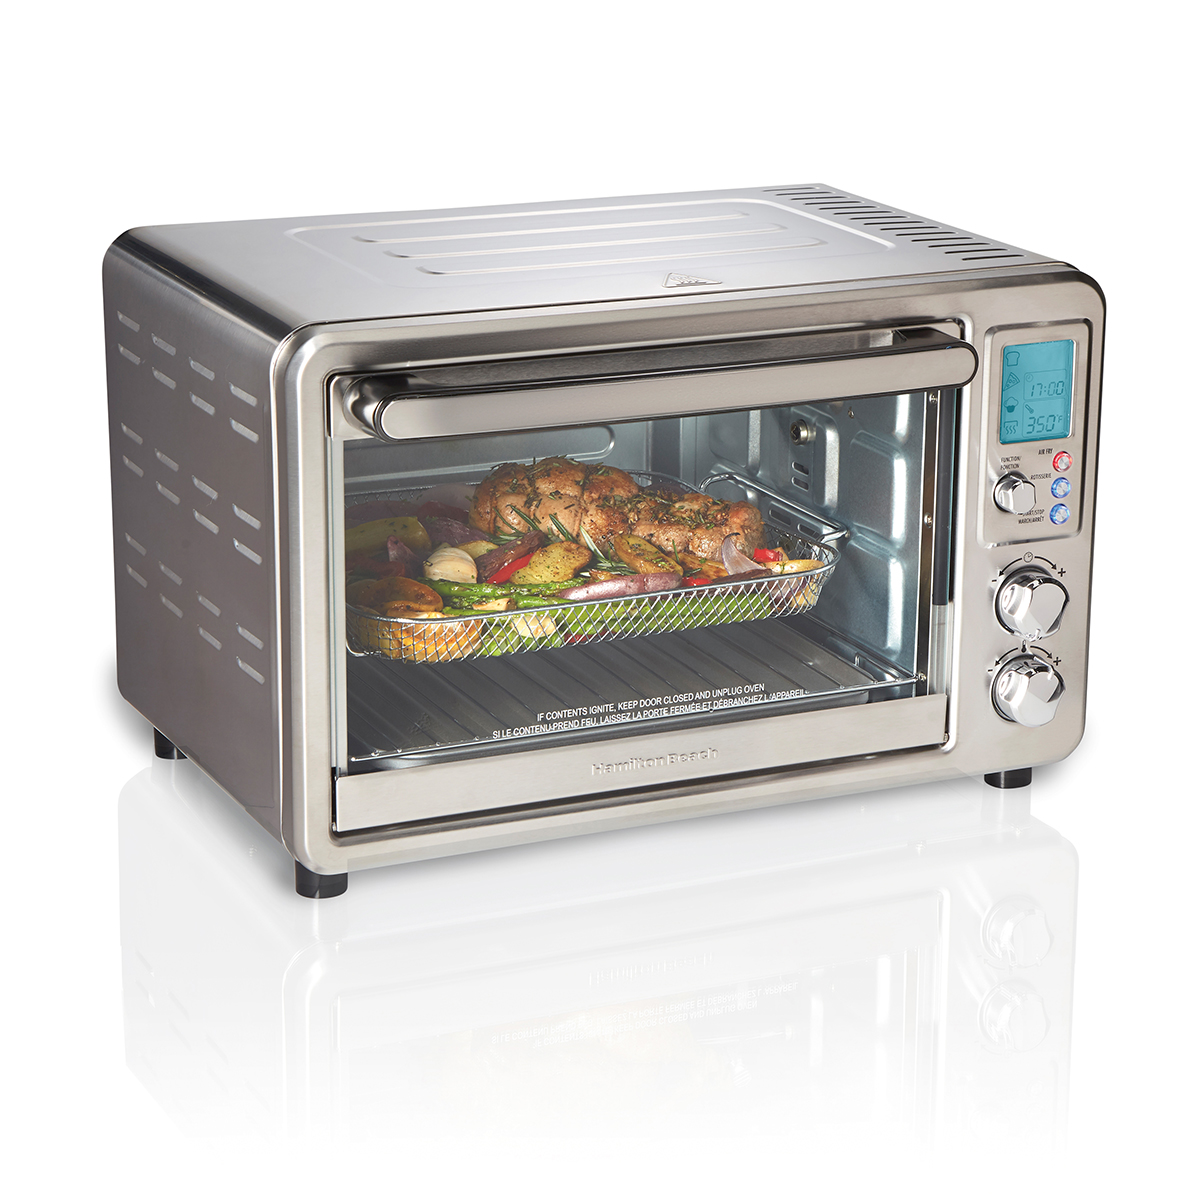 Sure-Crisp® Digital Air Fryer Toaster Oven with Rotisserie (31193)